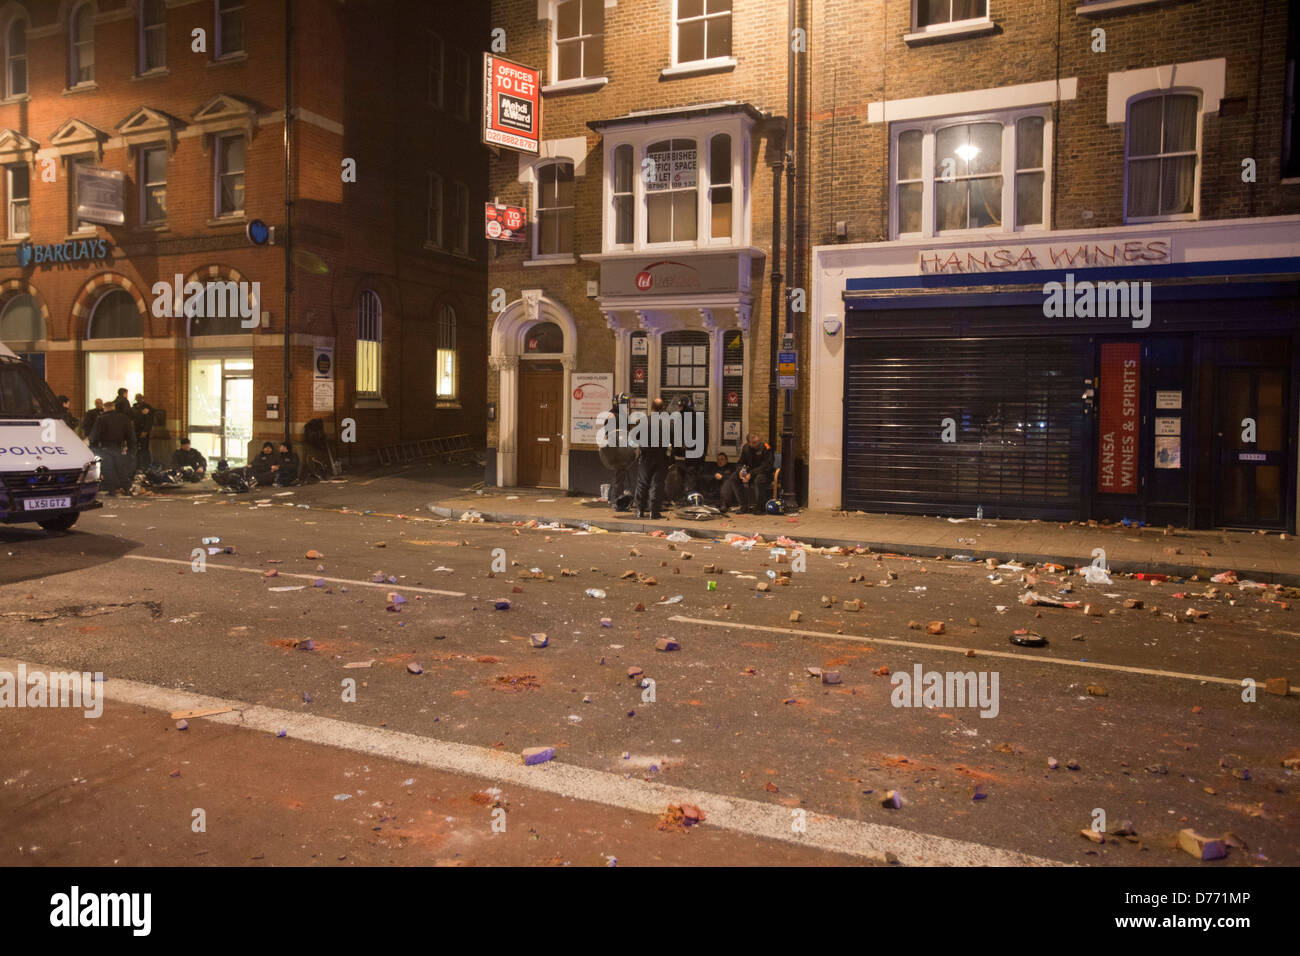 London Riots 2011, Tottenham Stock Photo